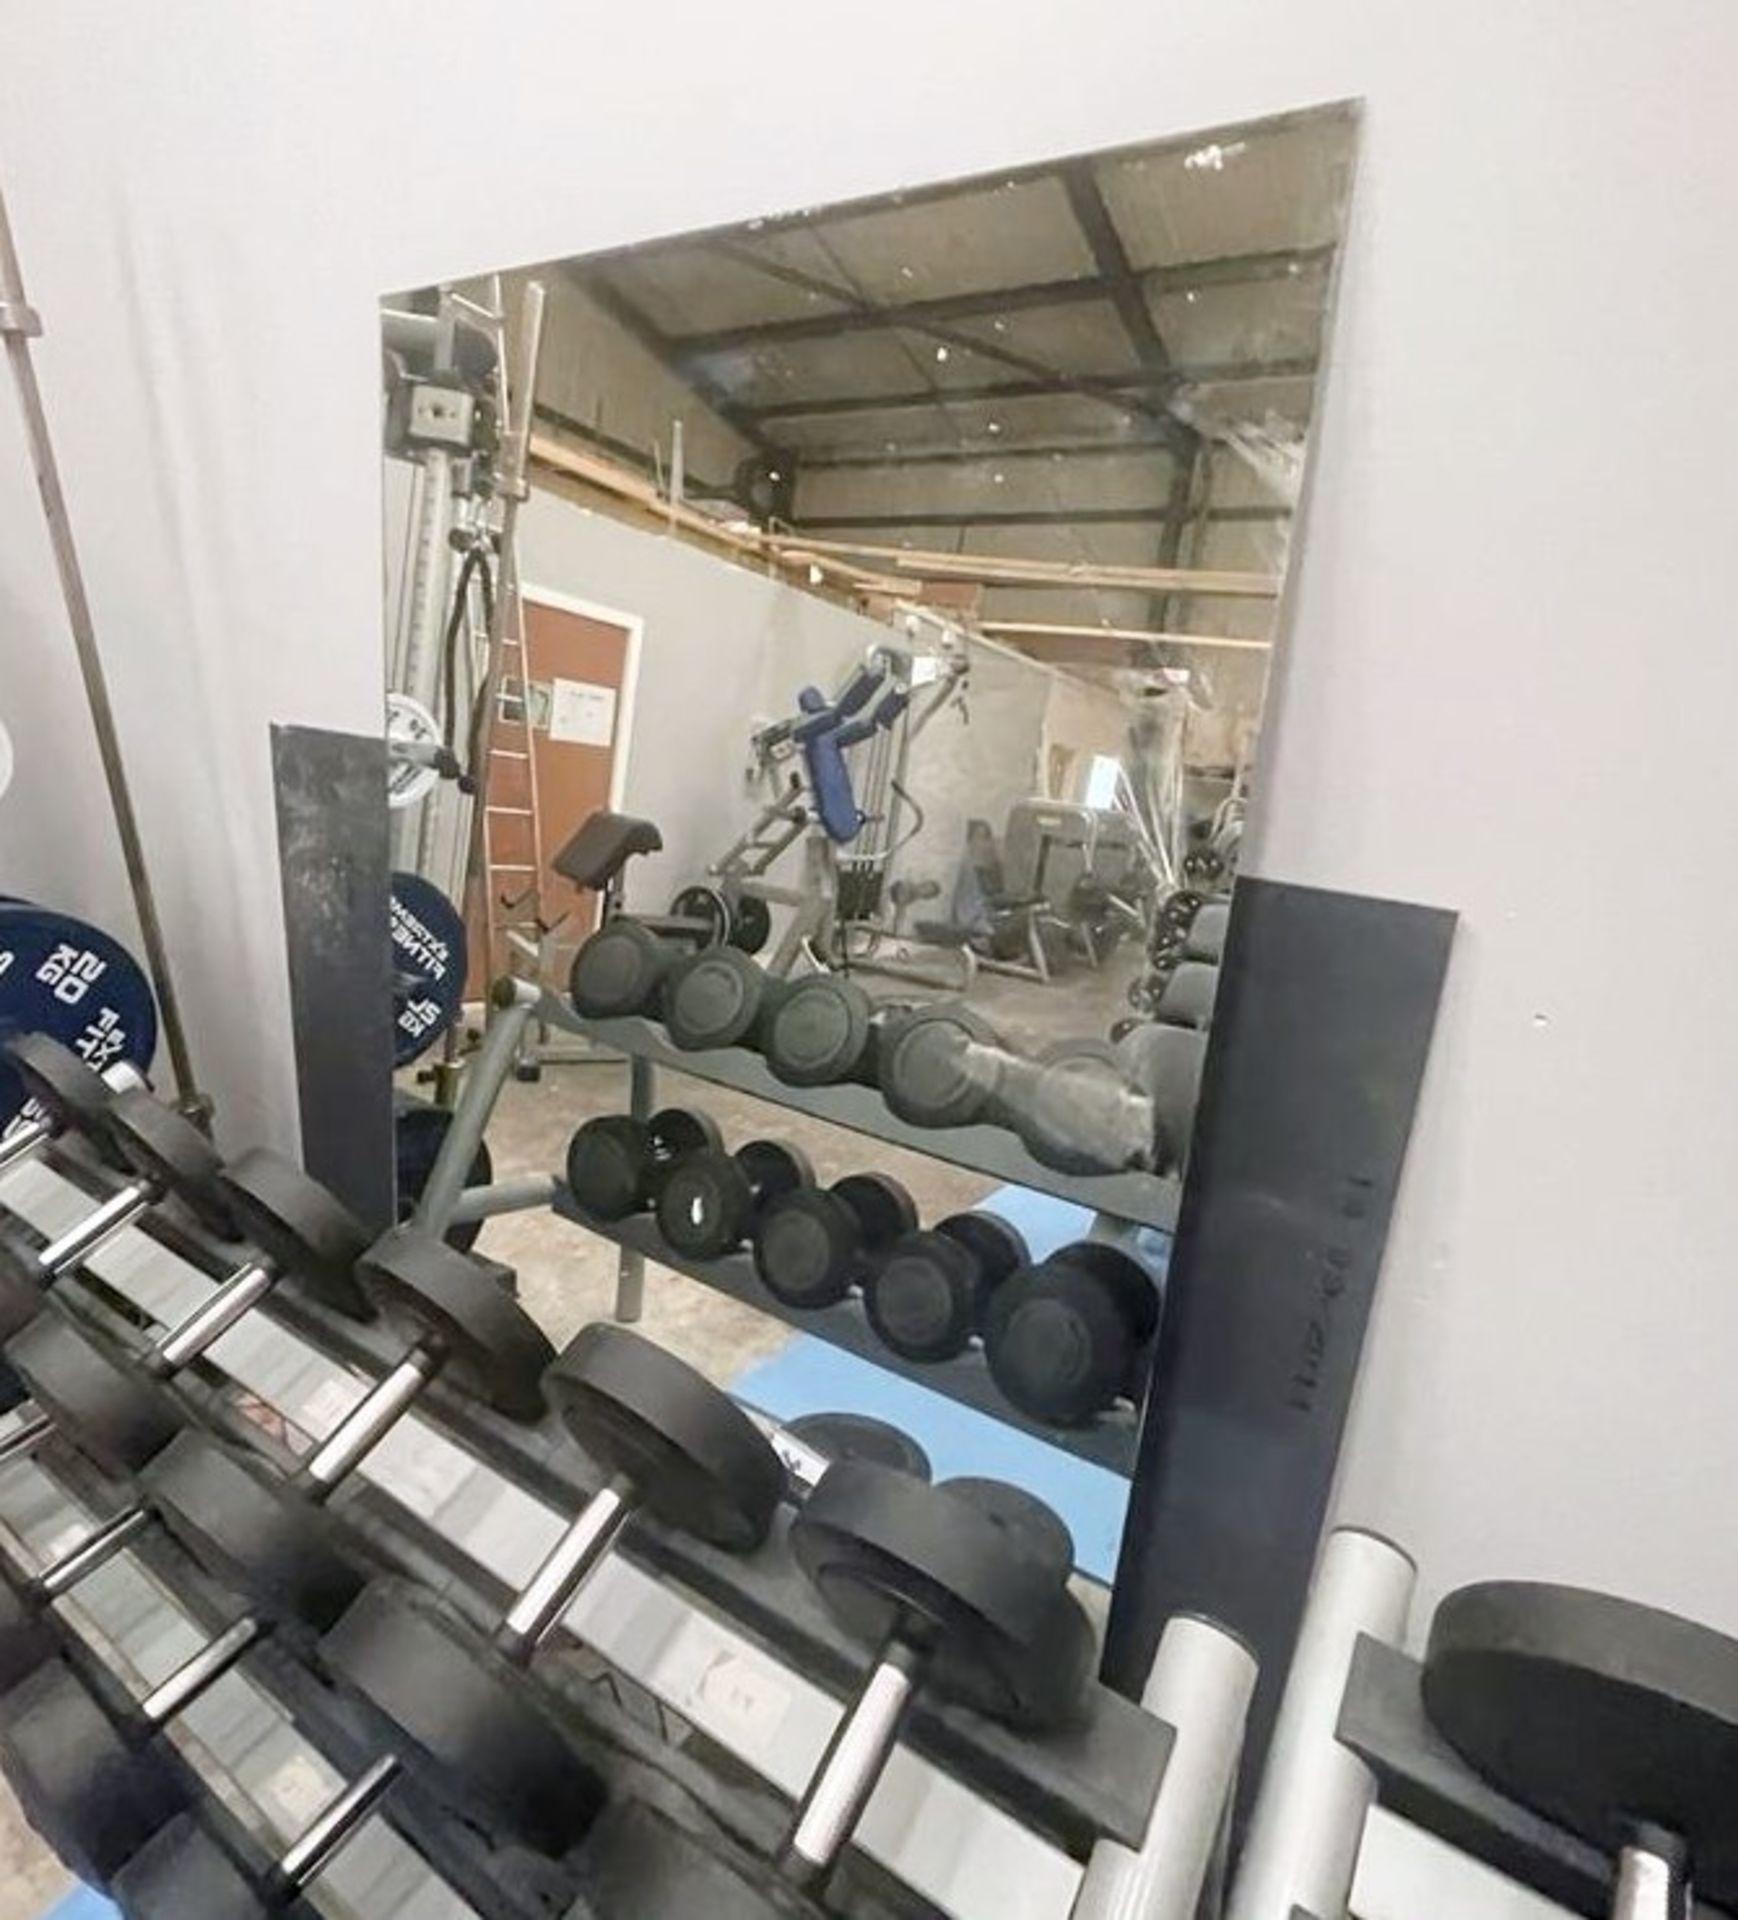 1 x Large Gym Mirror - Commercial Gym Equipment - Location: Blackburn BB6